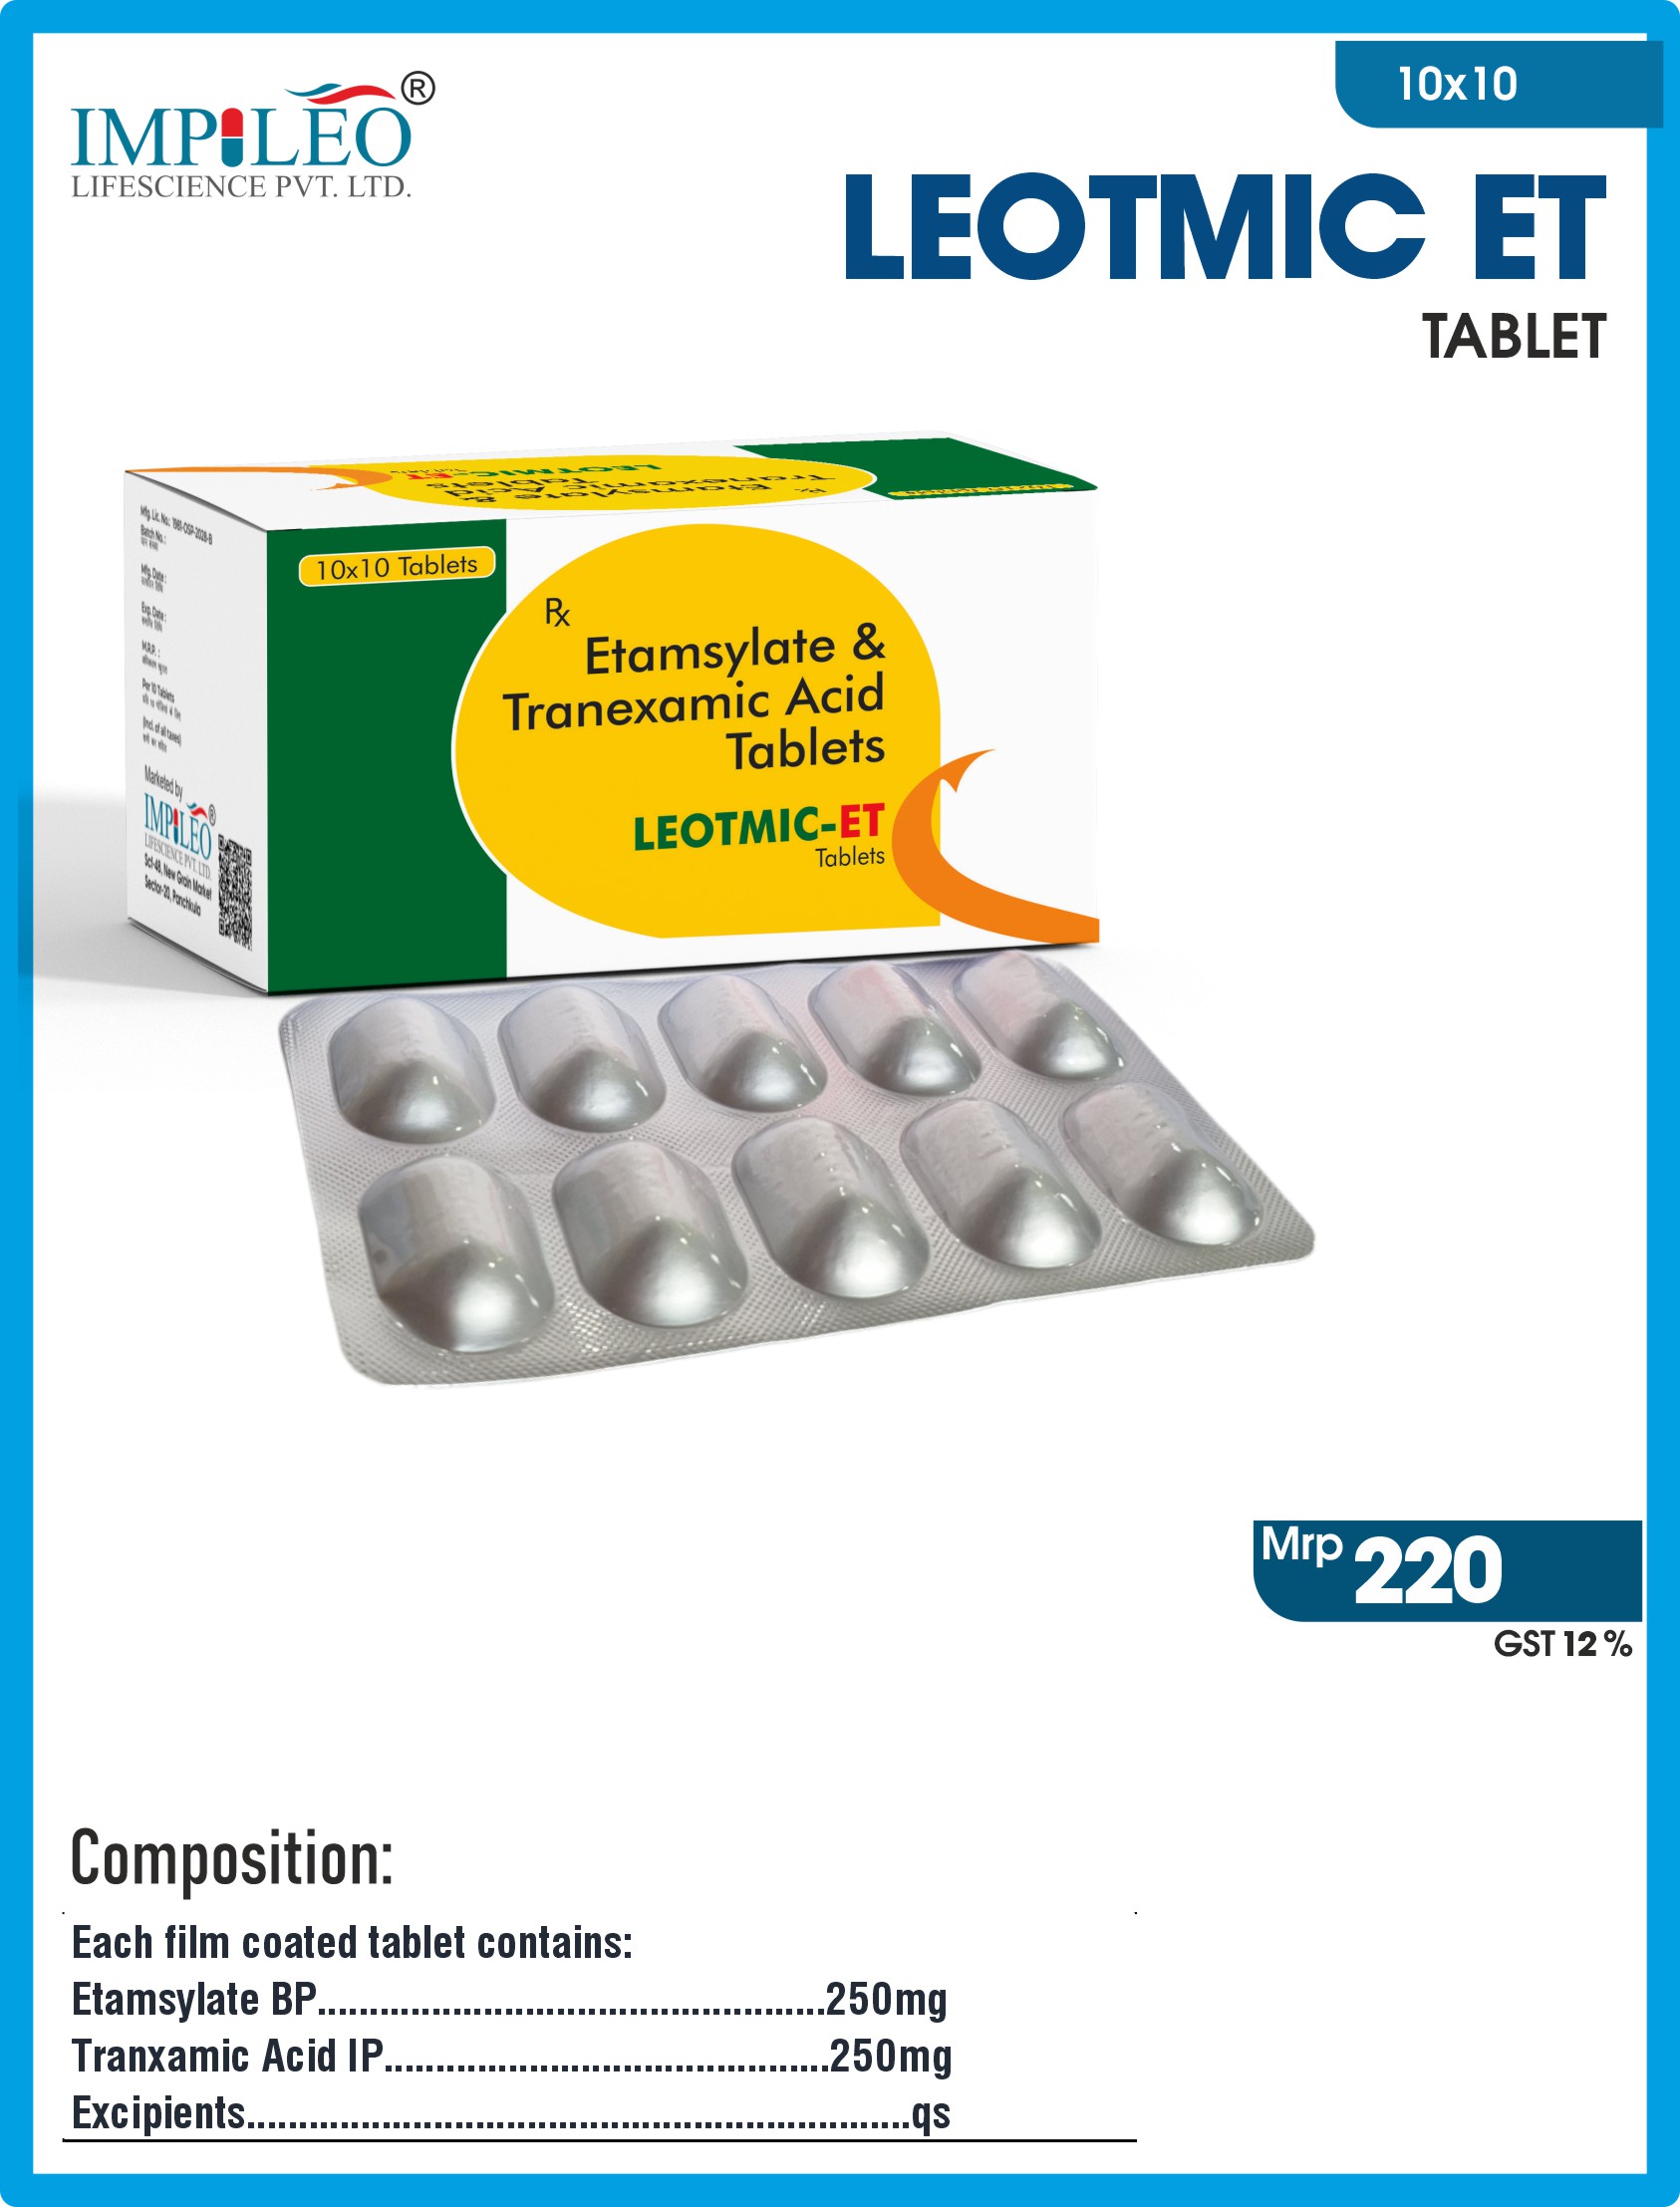 Superior Formulation : (Etamsylate BP + Tranexamic Acid) LEOTMIC-ET Tablets from Trusted PCD Pharma Franchise in India